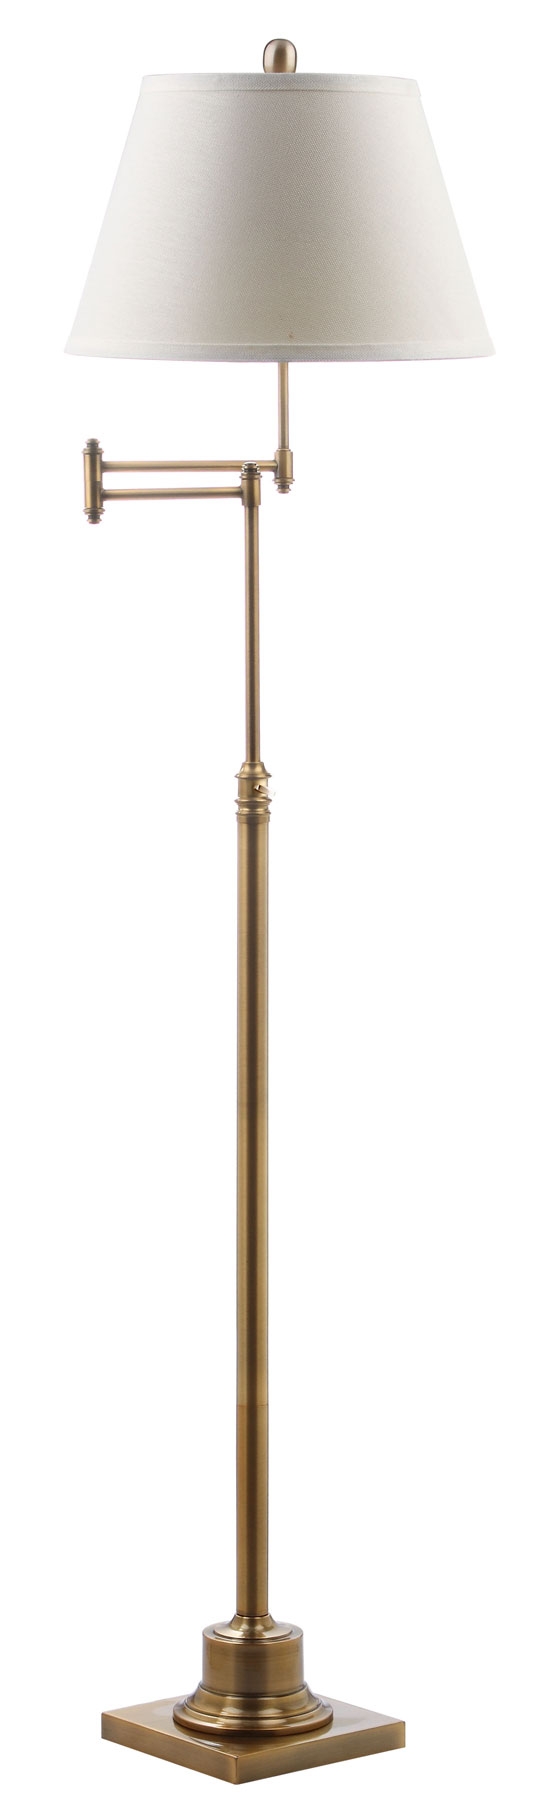 Ingram 68.5 -Inch H Adjustable Swivel Floor Lamp - Gold - Arlo Home - Image 2